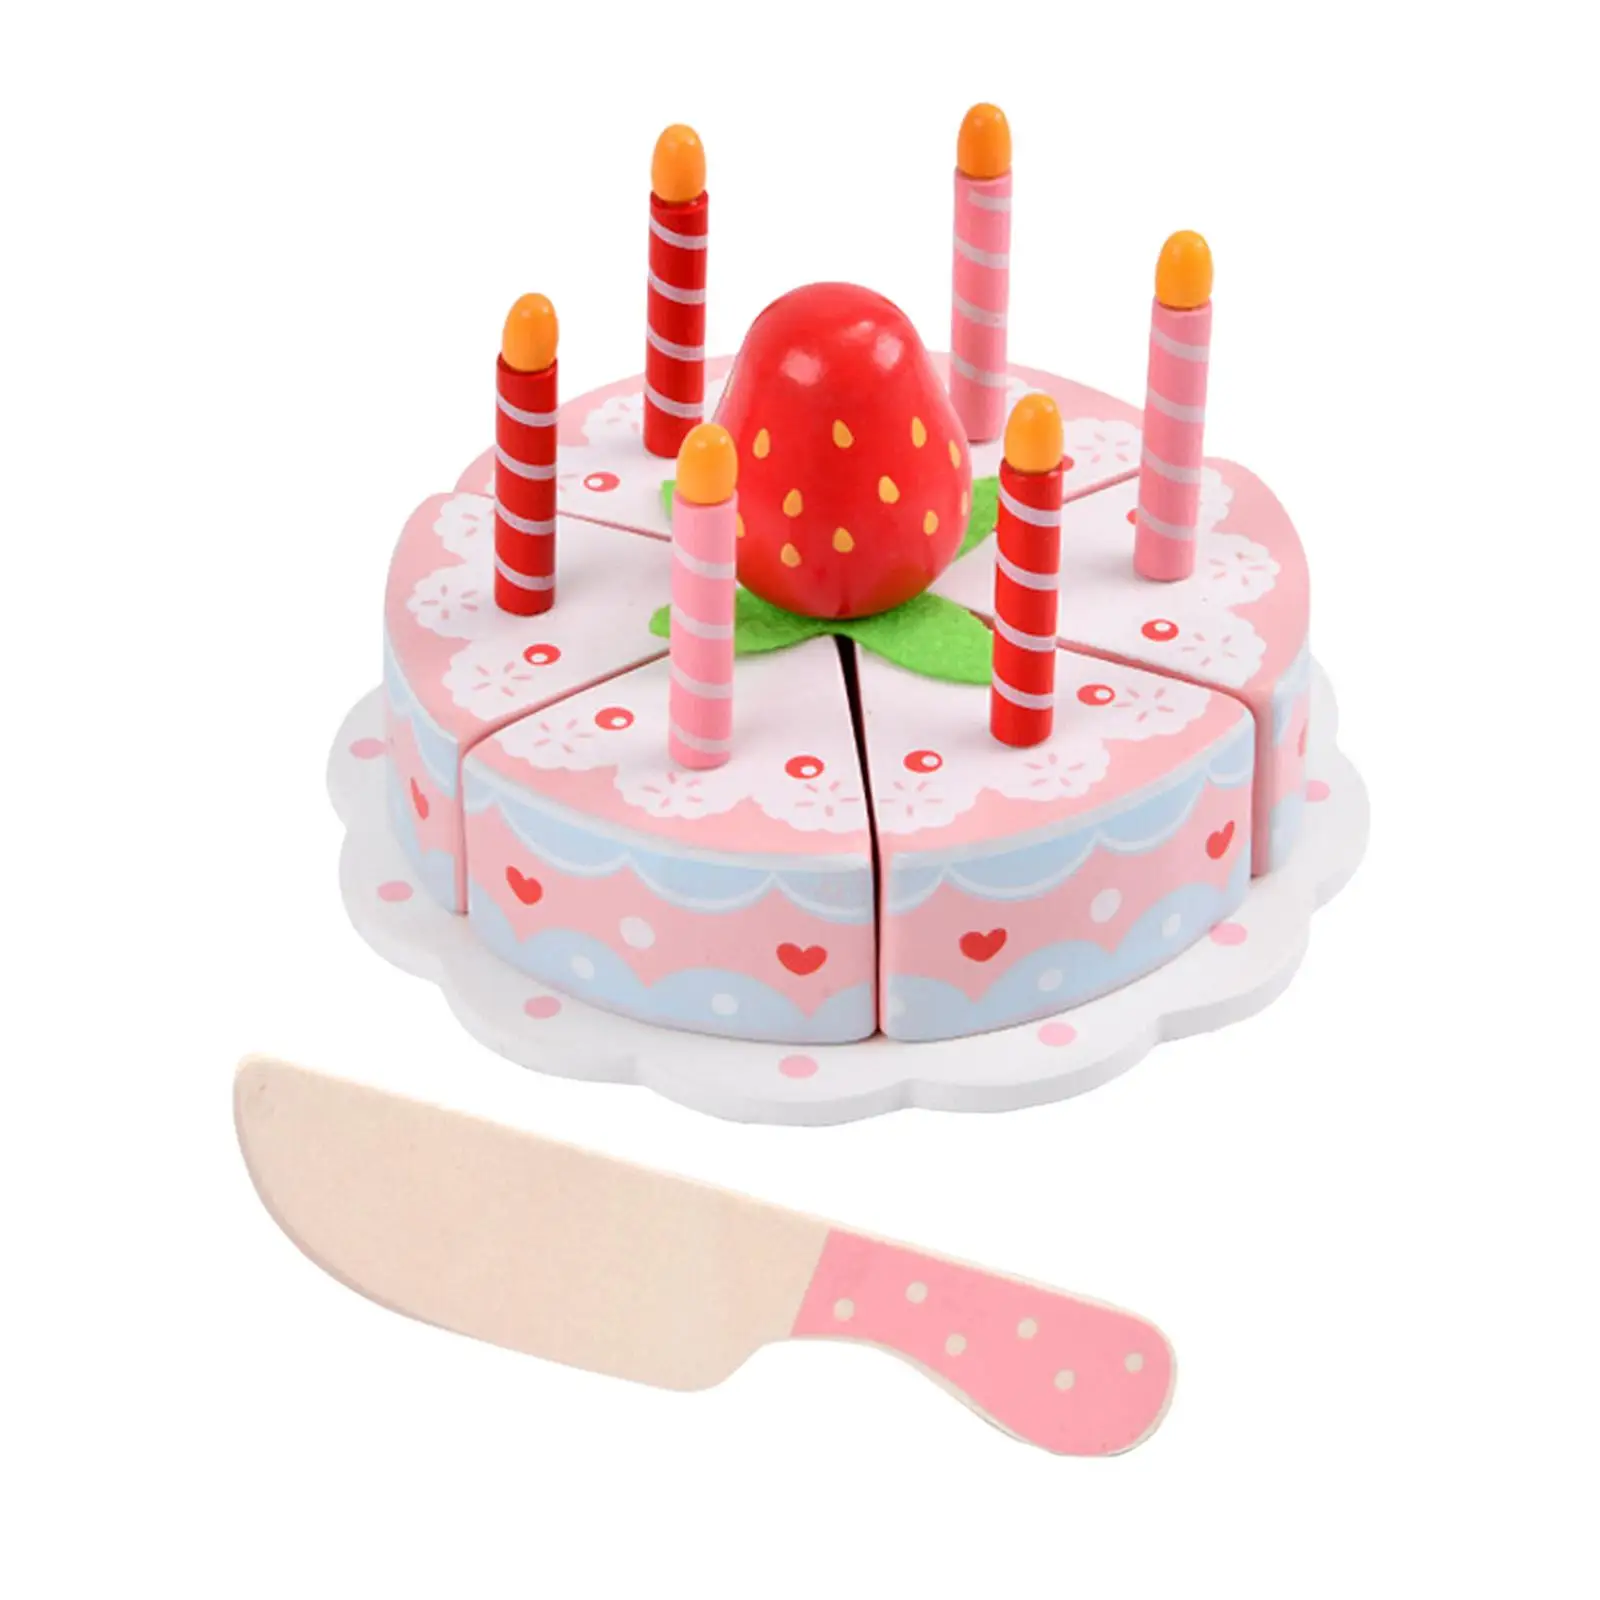 Wooden Birthday Cake Toy Early Educational Toys Strawberry Birthday Cake for Children 3 4 5 6 Boys Girls Kids Holiday Gift